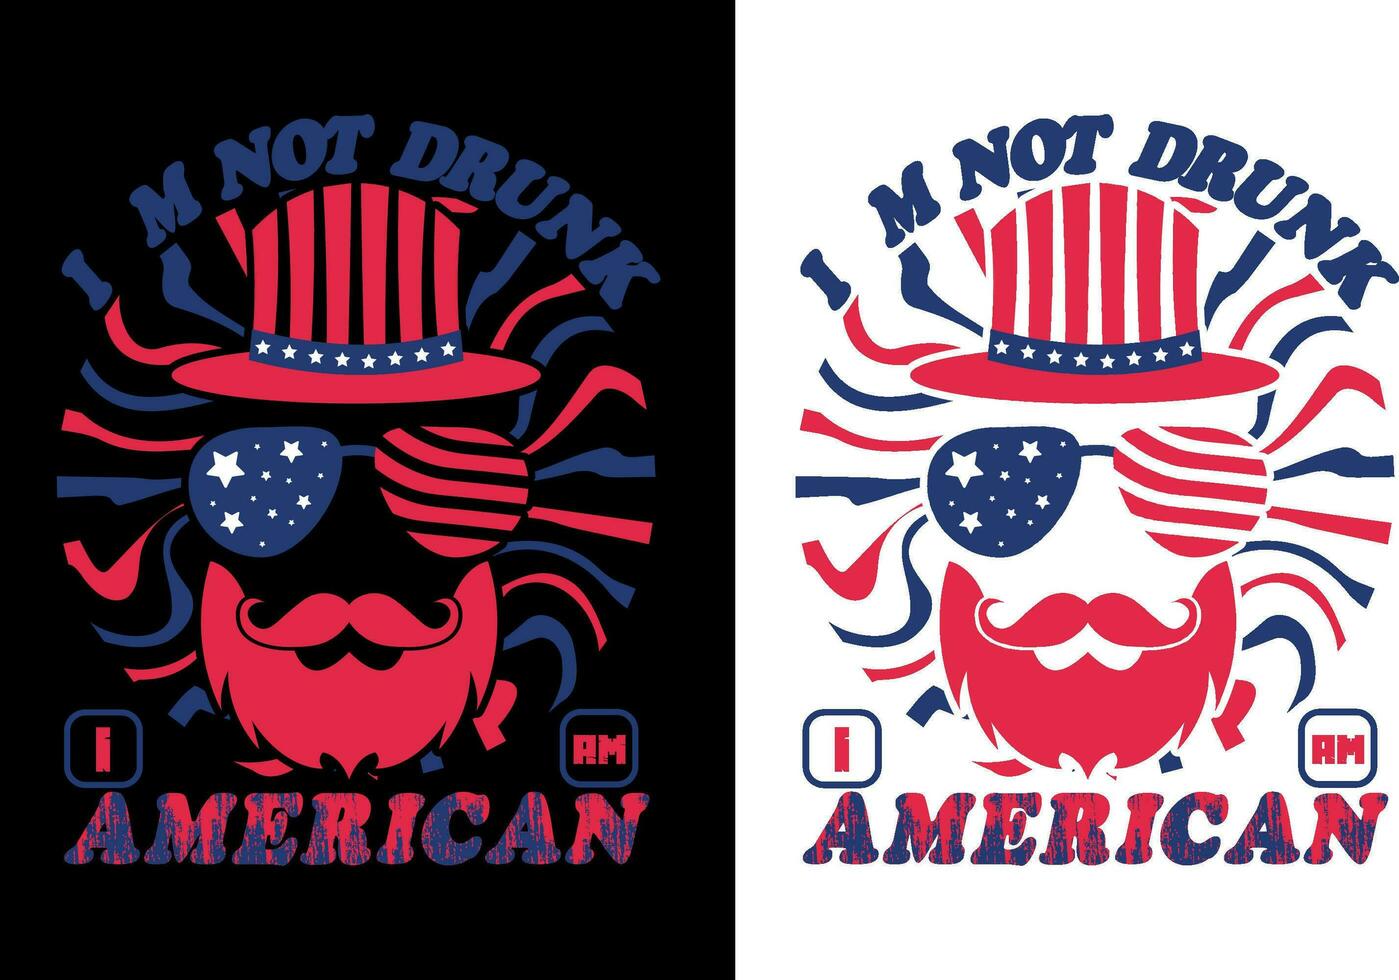 jag am full amerikansk, 4:e av juli skjorta, Lycklig 4:e juli, USA t-shirt design, oberoende t-shirt, 4:e av juli t-shirt design, vektor